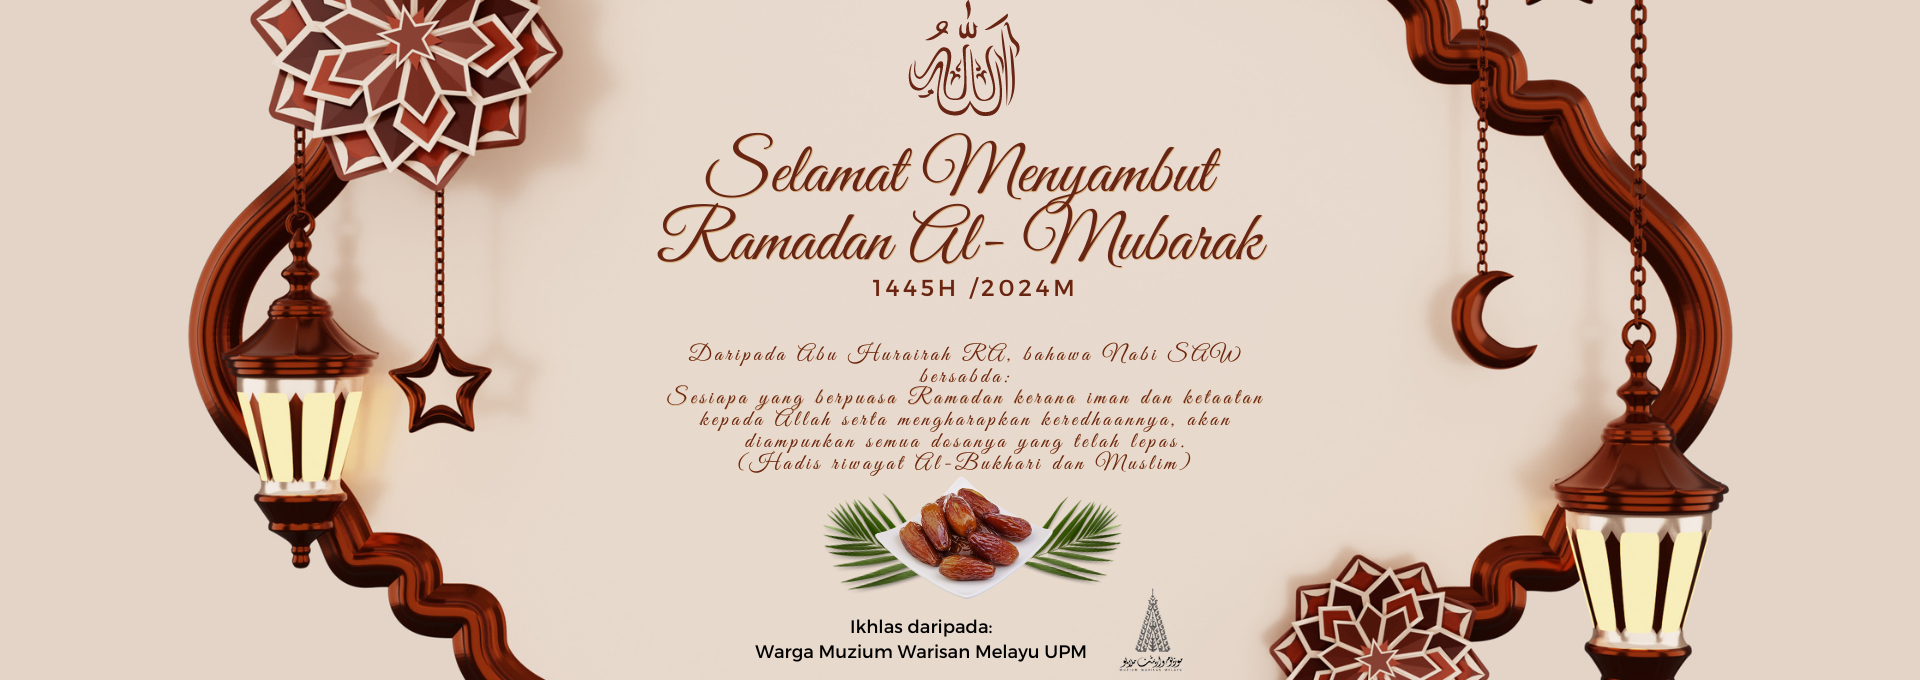 Poster Ramadan